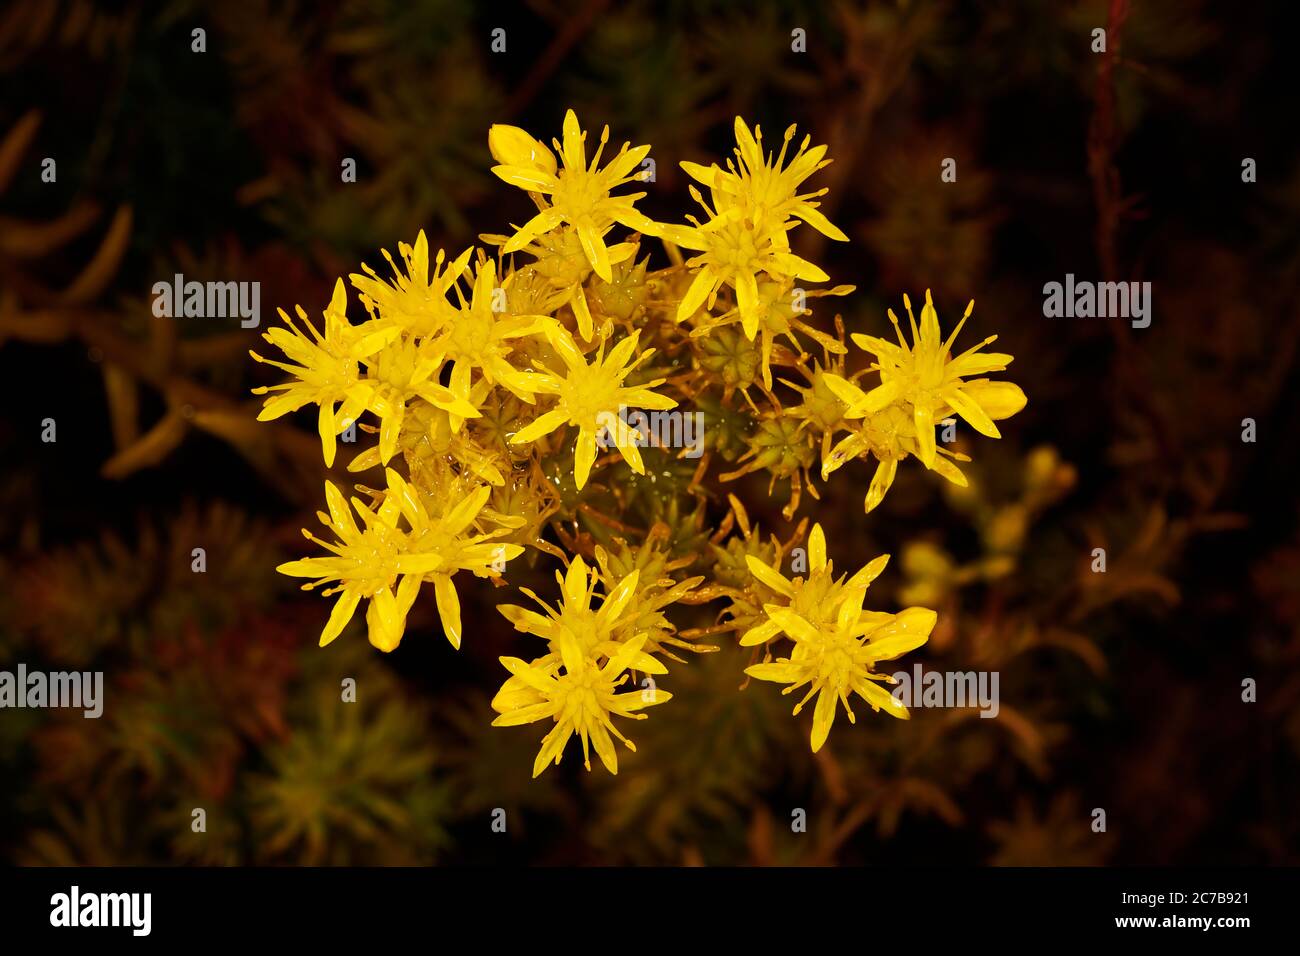 Small yellow flowers of the Reflexed Stonecrop (sedum rupestre) plant. Stock Photo